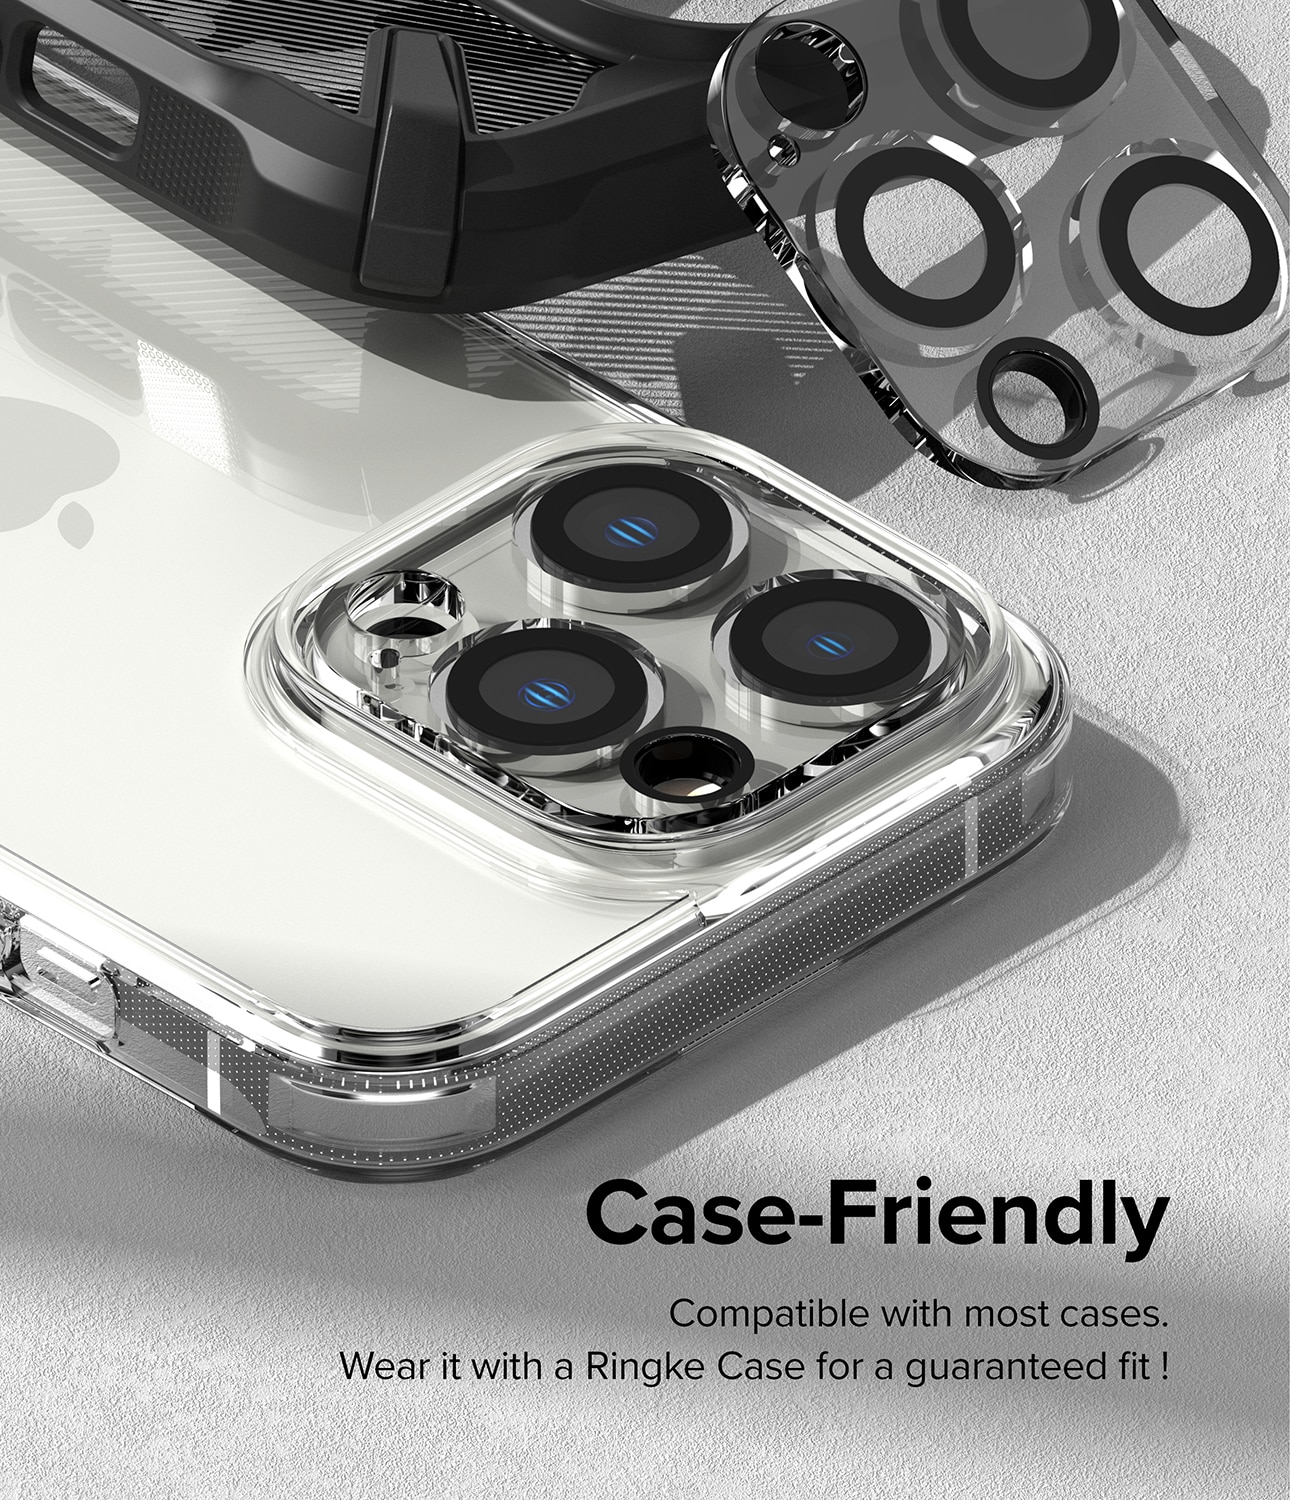 Camera Protector Glass (2 pièces) iPhone 14 Pro Max Transparent